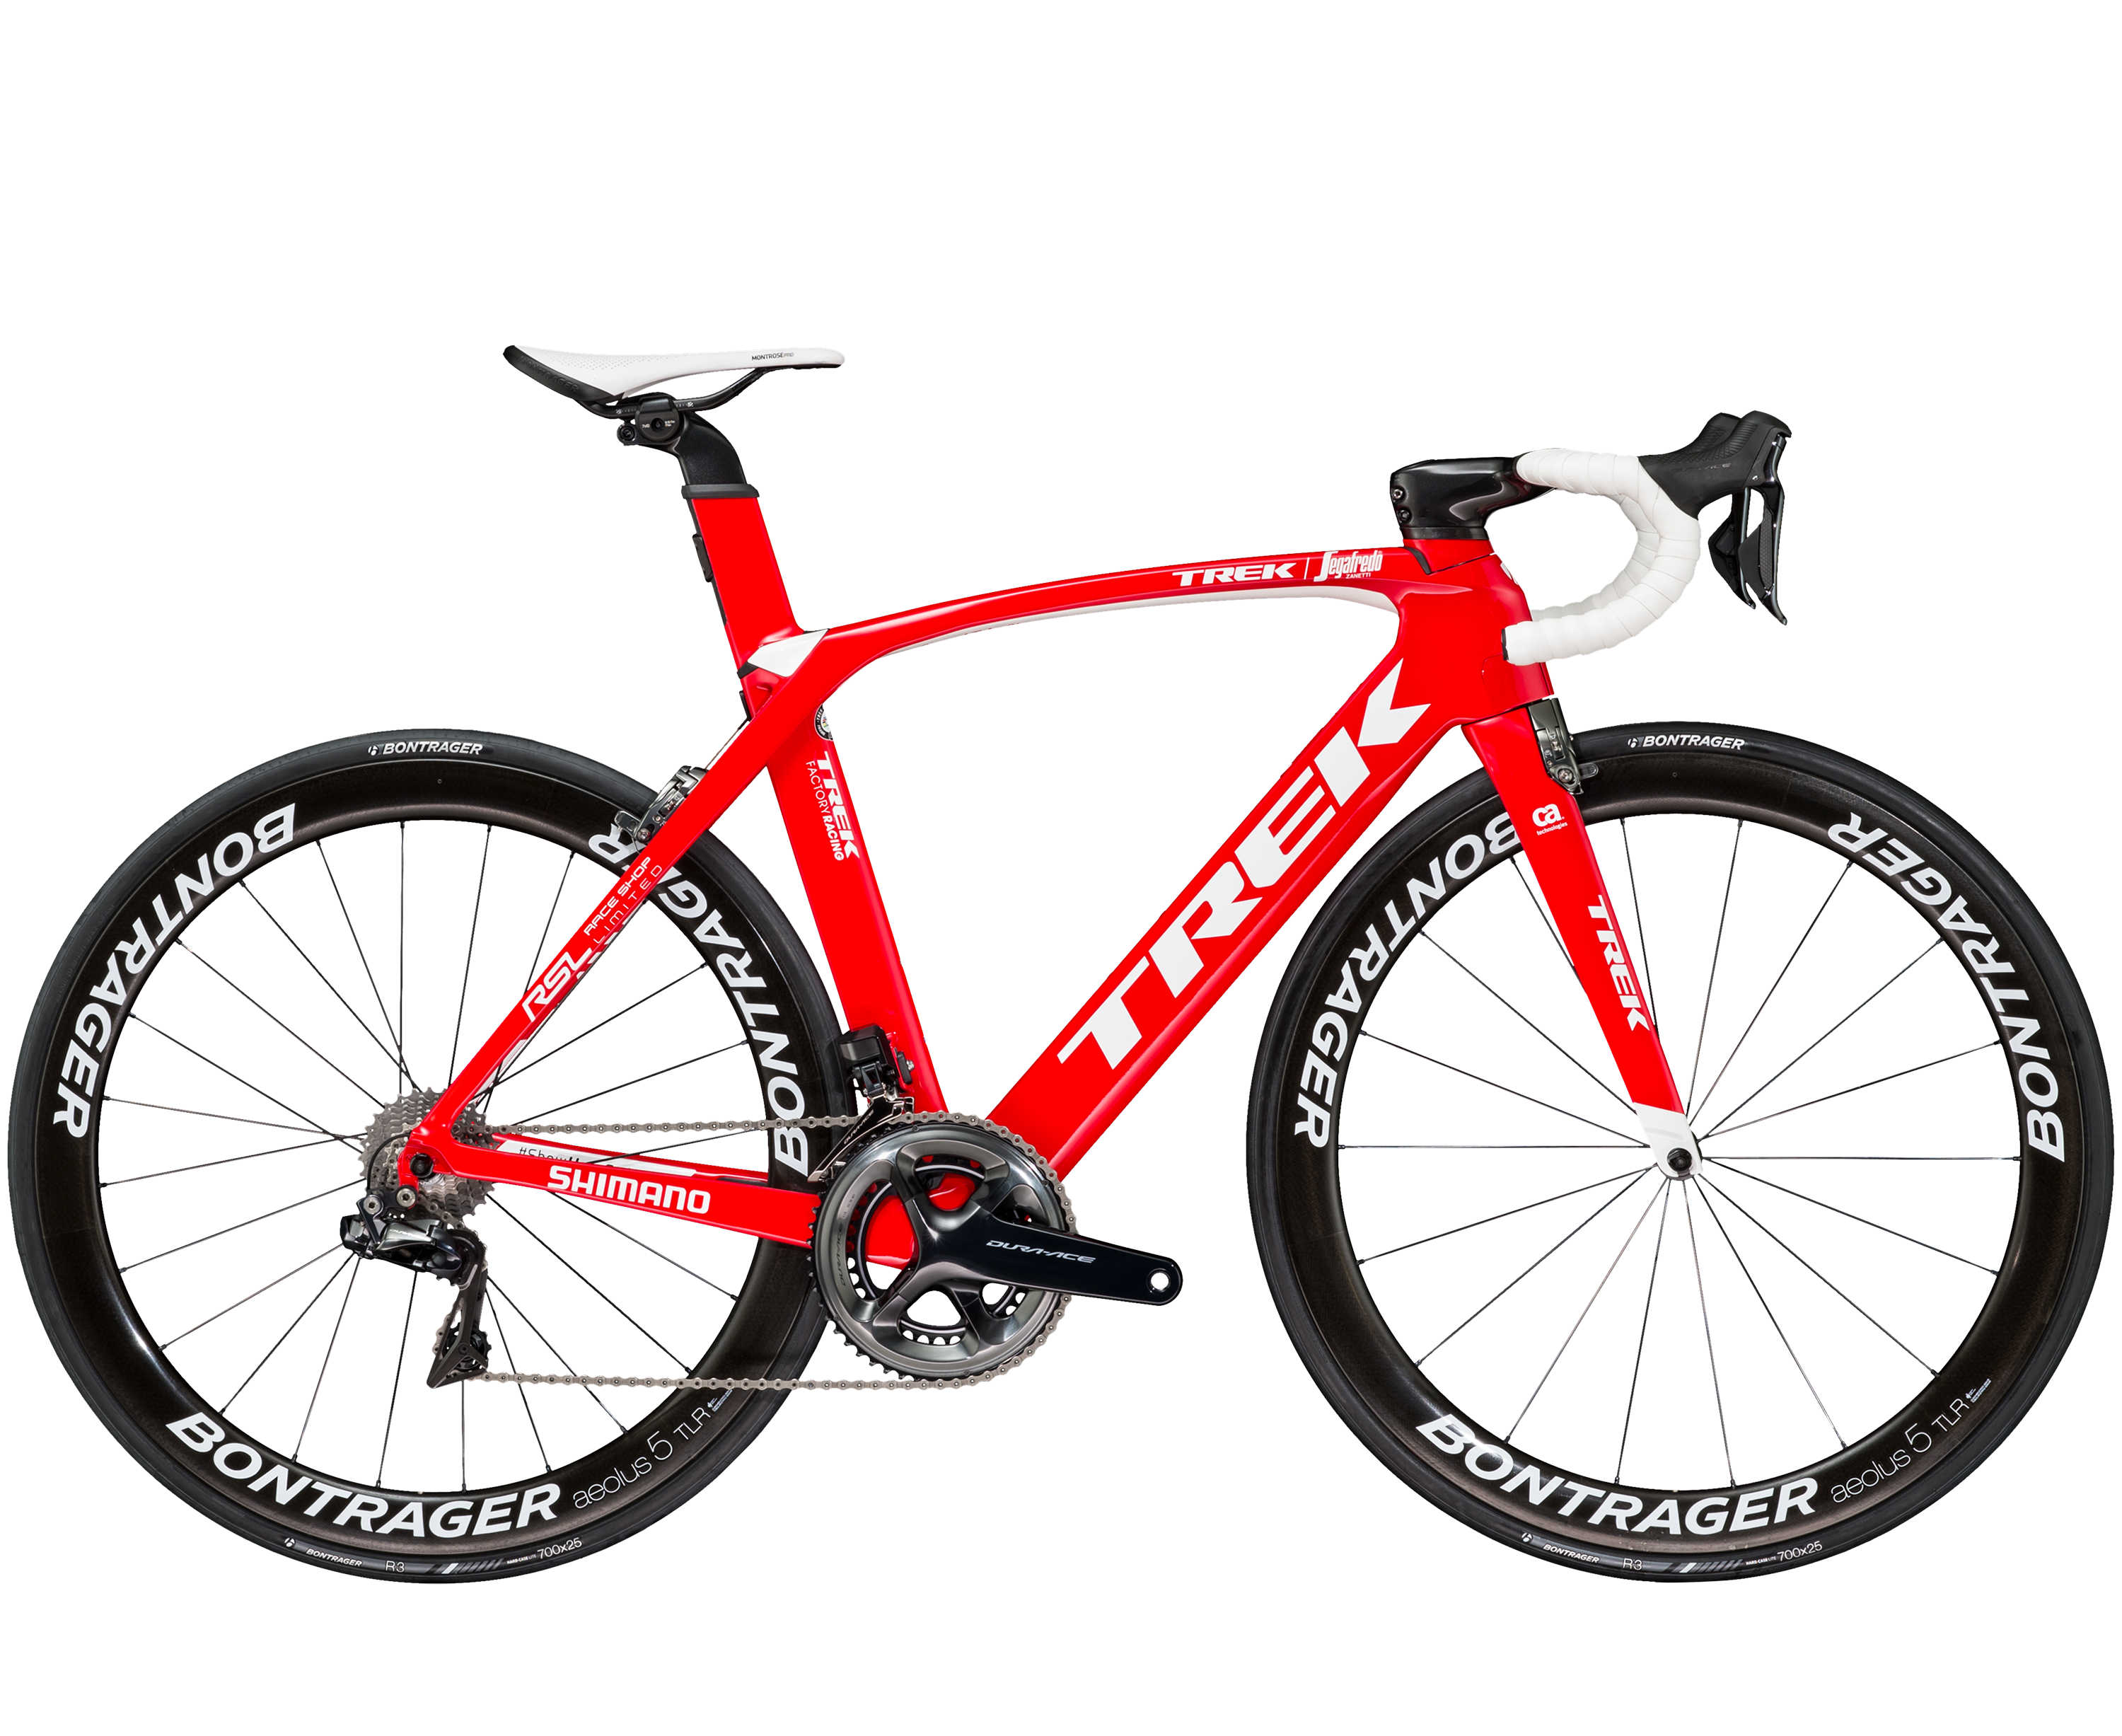 Xe đạp đua Trek Madone Race Shop Limited đỏ red